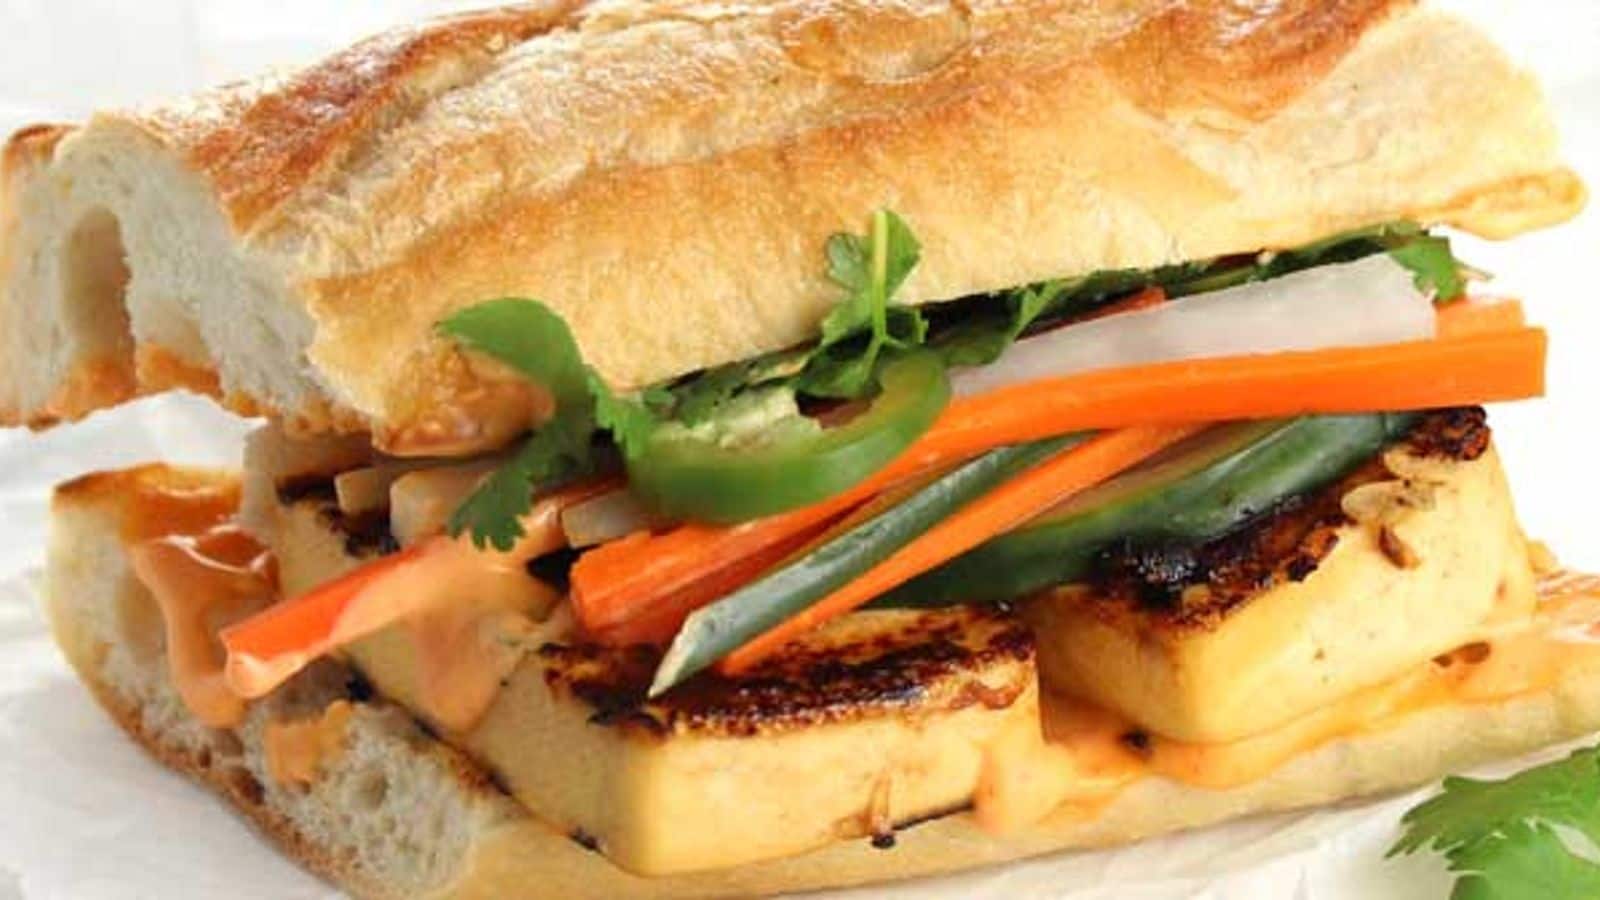 Vietnamese banh mi sandwich: Follow this recipe